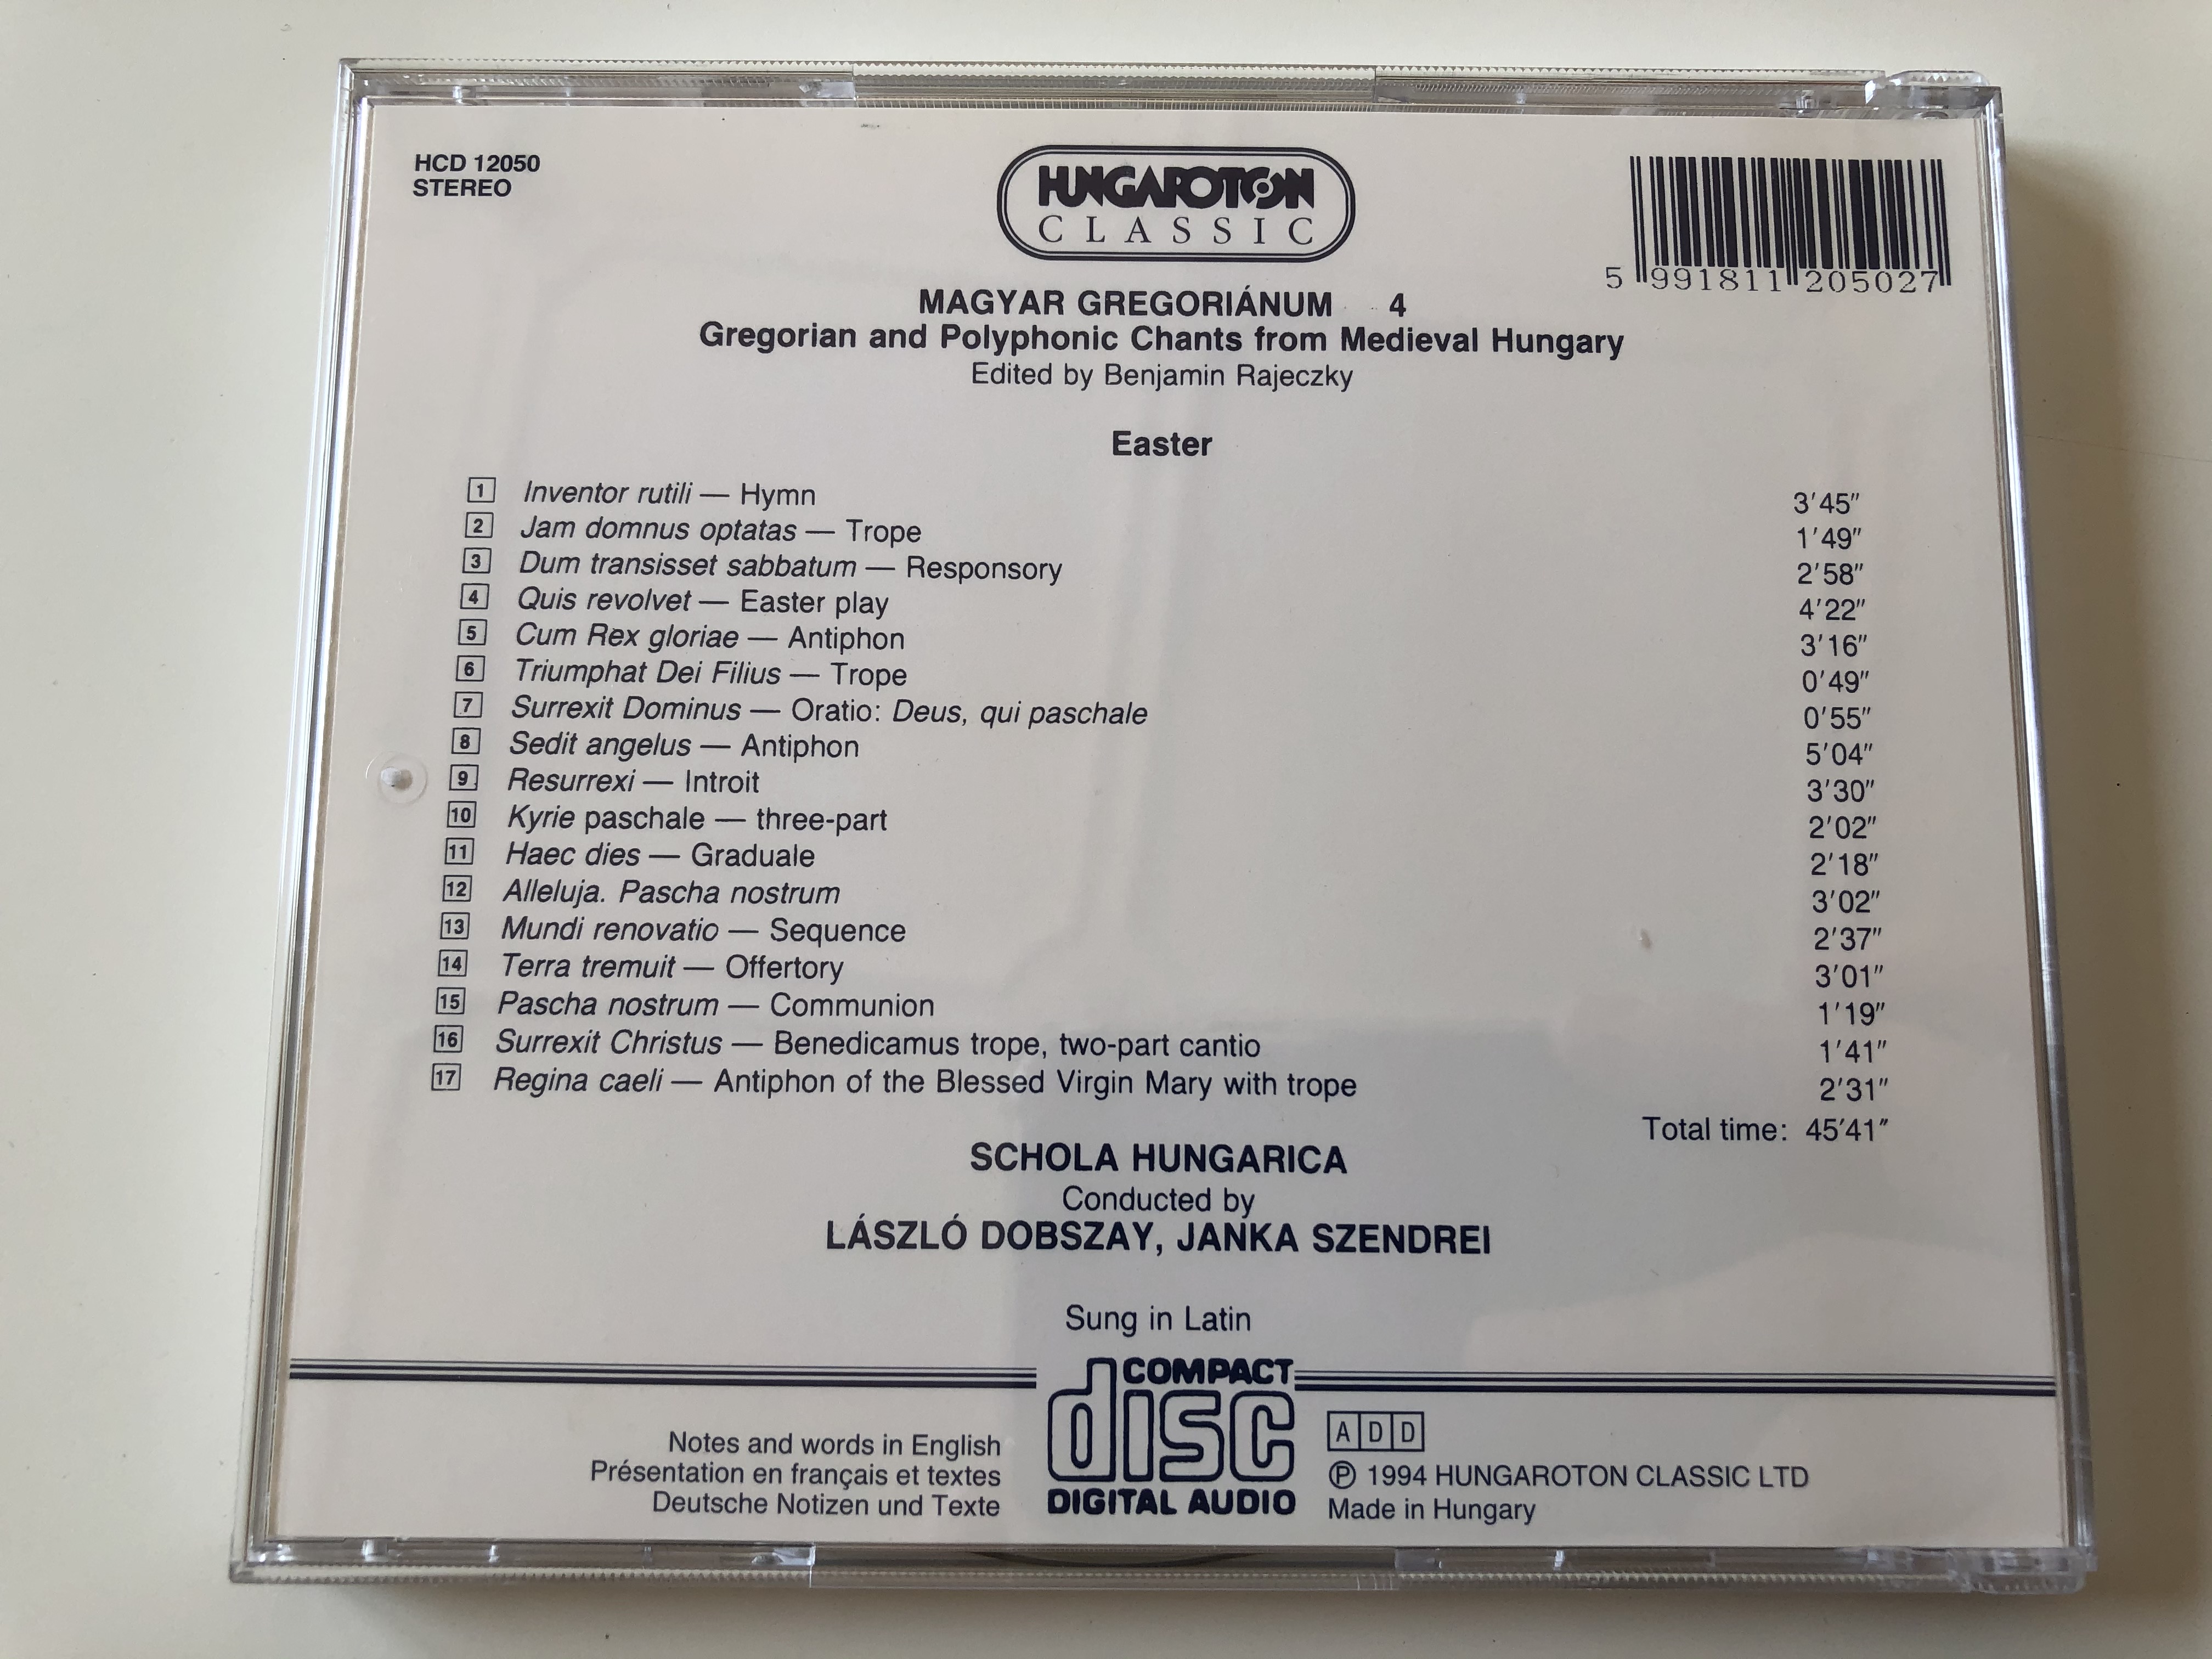 magyar-gregori-num-4-gregorian-chants-from-medieval-hungary-easter-schola-hungarica-hungaroton-classic-audio-cd-1994-stereo-hcd-12050-9-.jpg